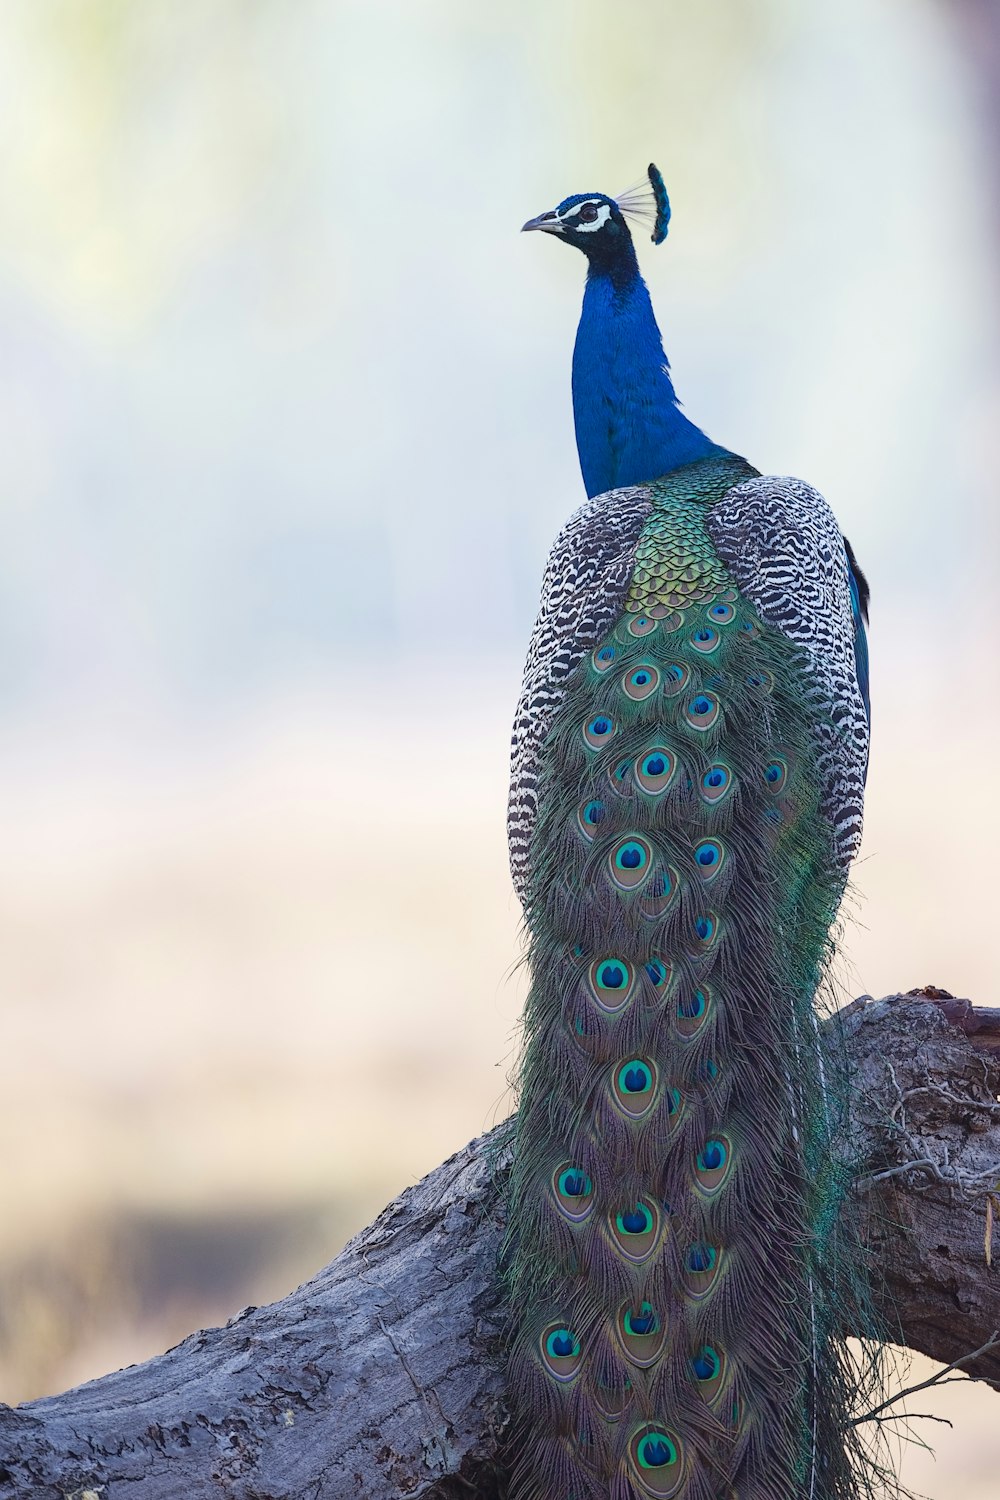 blue and green peacock photo – Free Bird Image on Unsplash